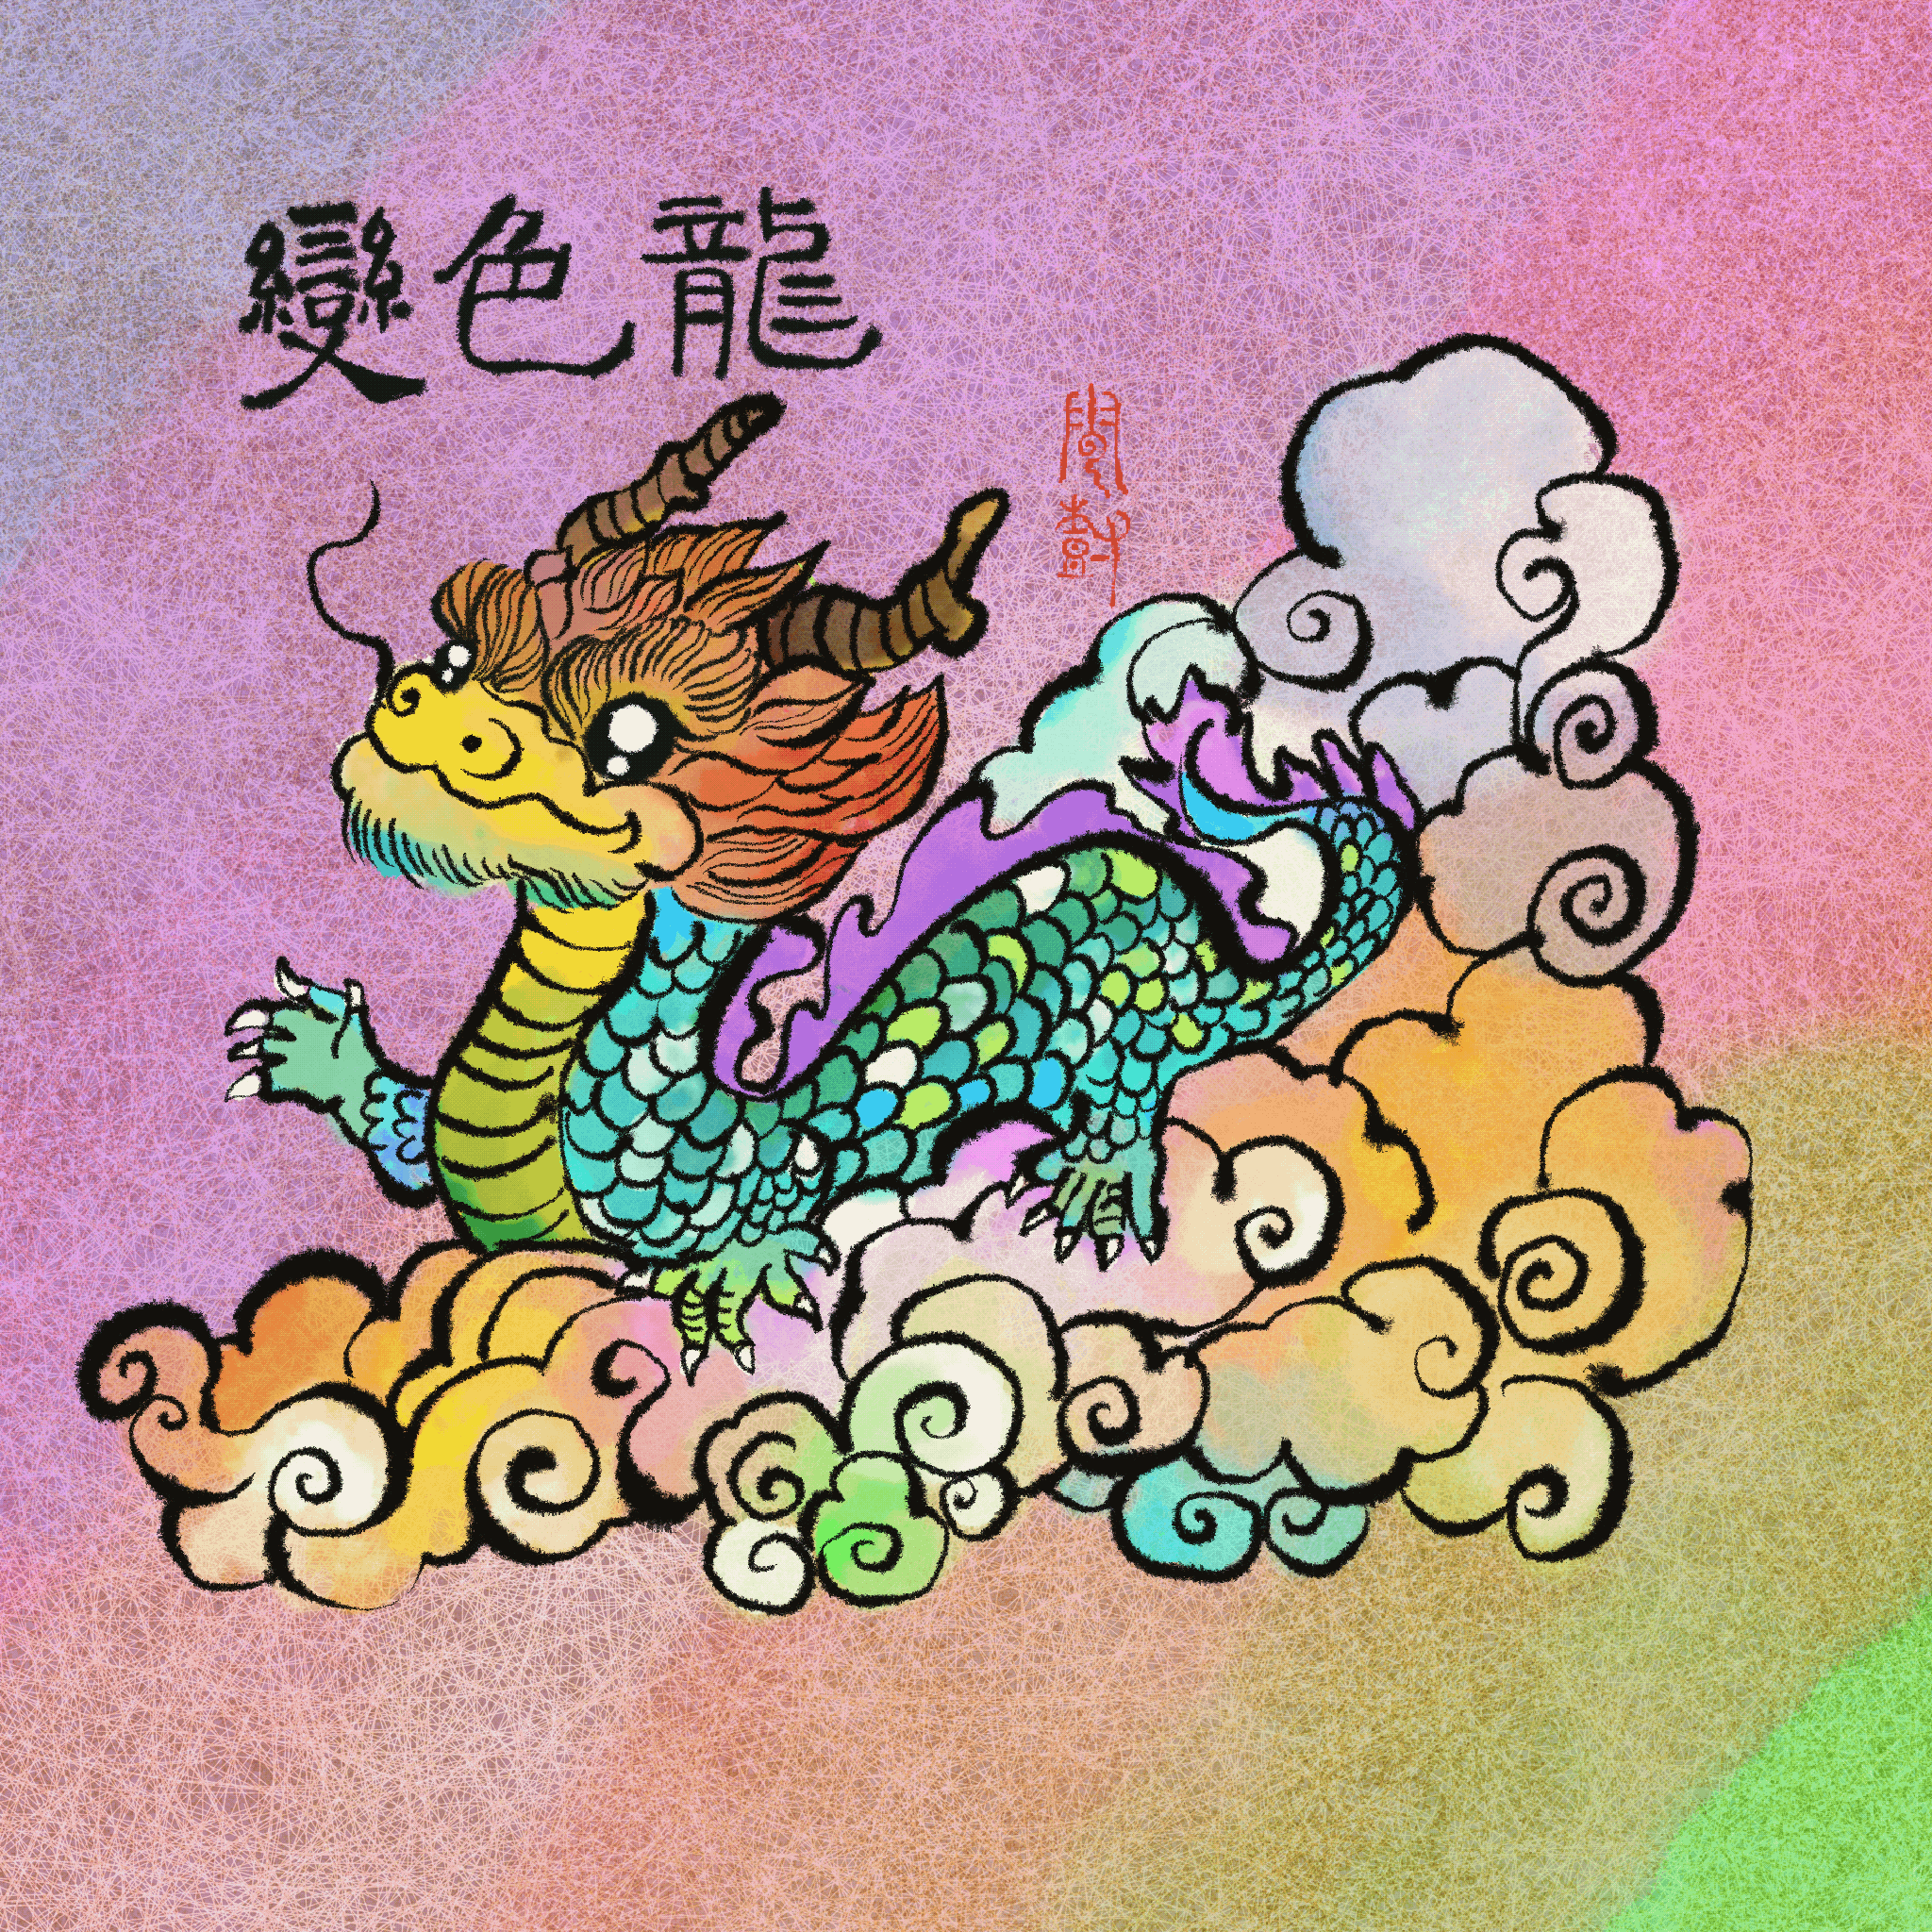 Baby Changing Dragon (变色龙)